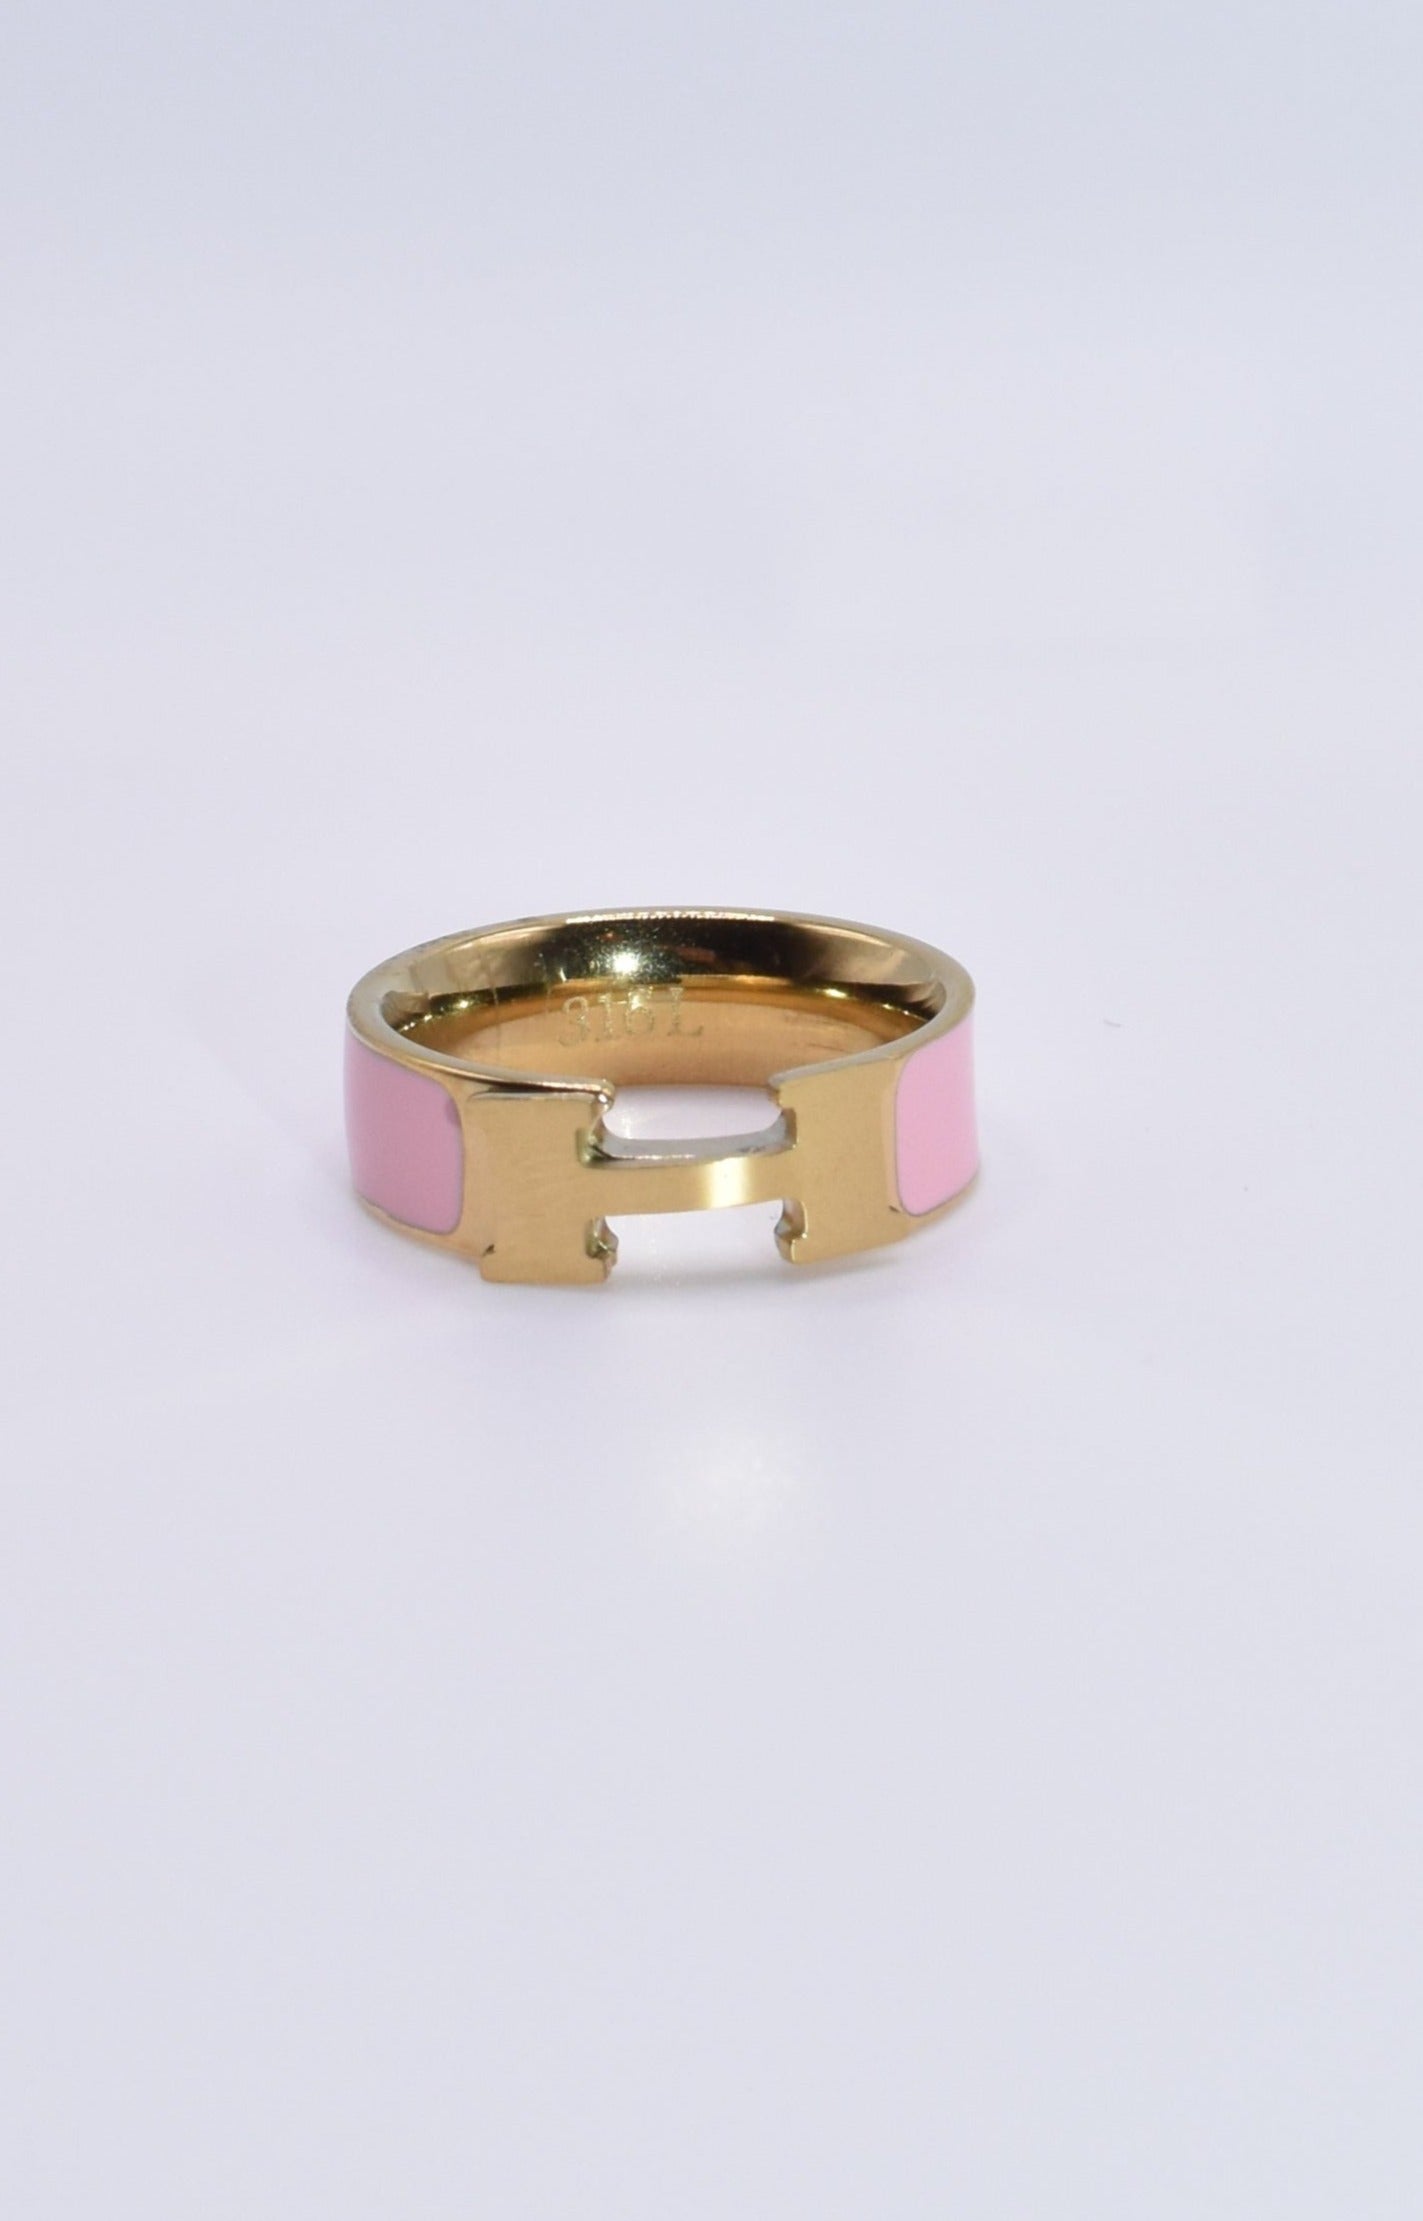 Designer Inspired "H' Ring - Pink